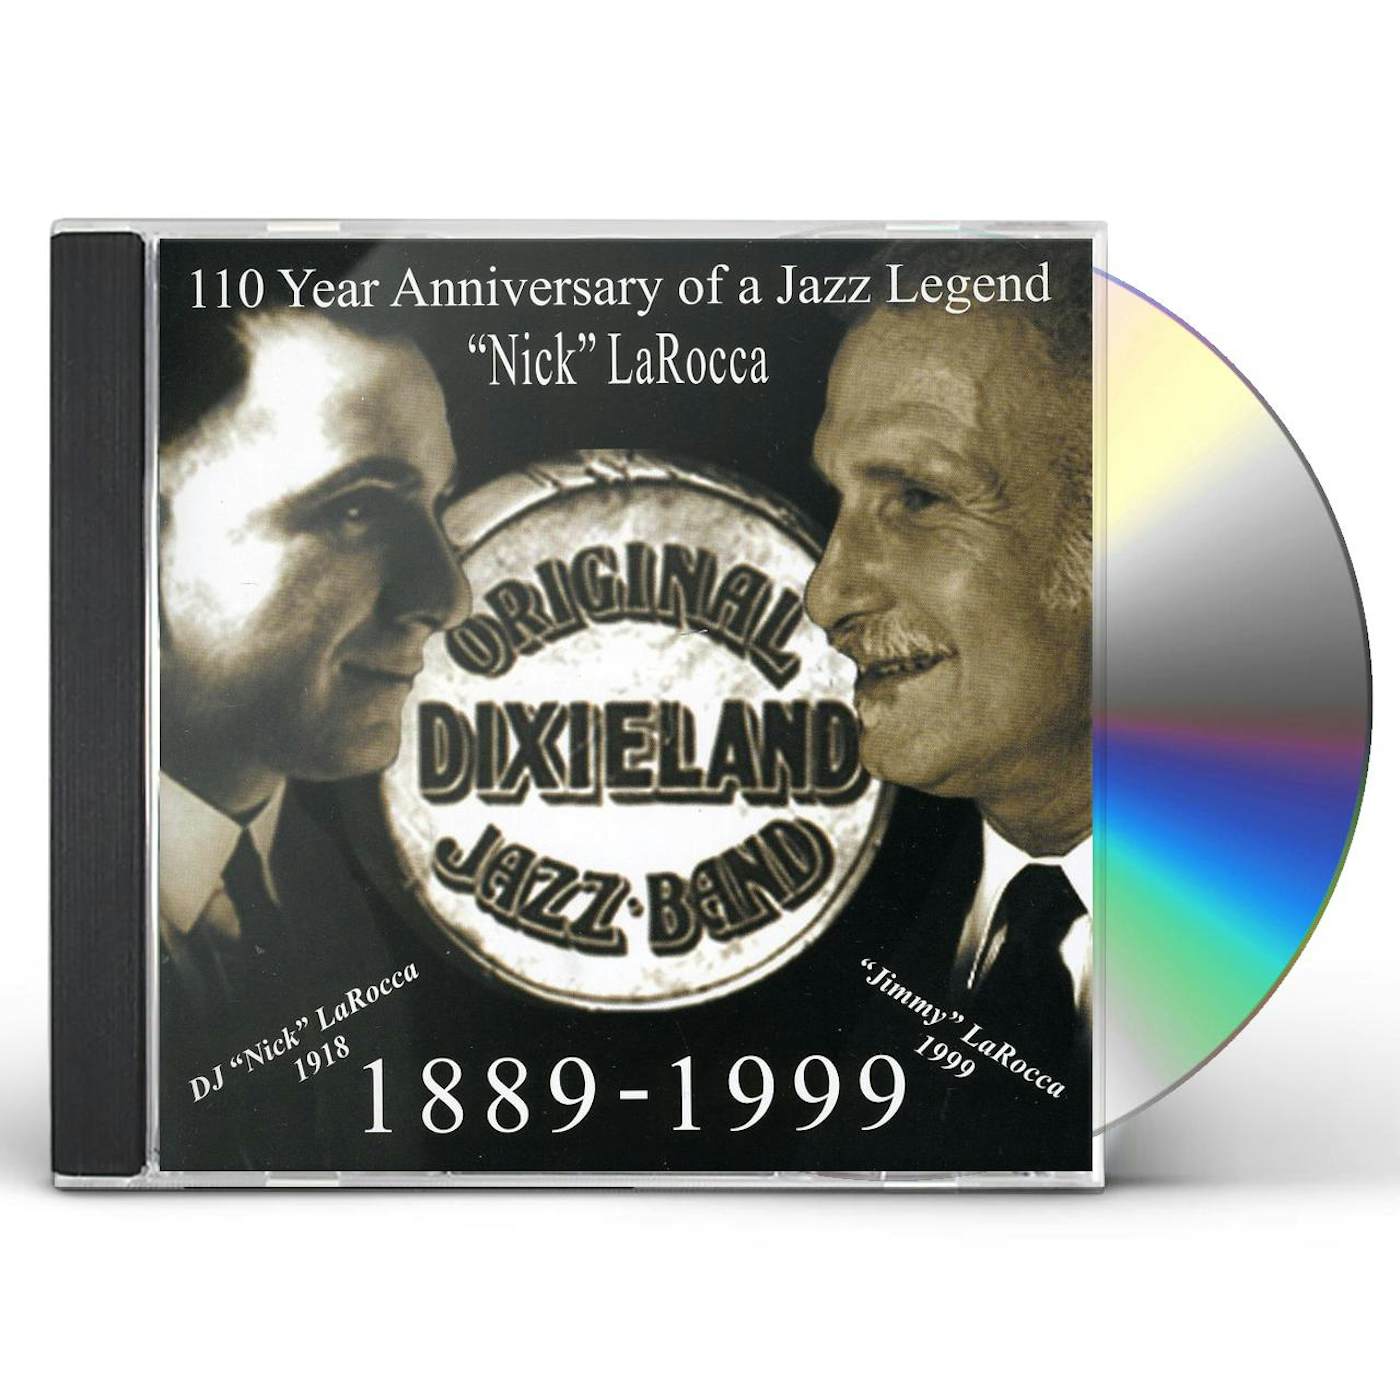 Original Dixieland Jazz Band 110 YEAR ANNIVERSARY OF JAZZ LEGEND: NICK LAROCCA CD